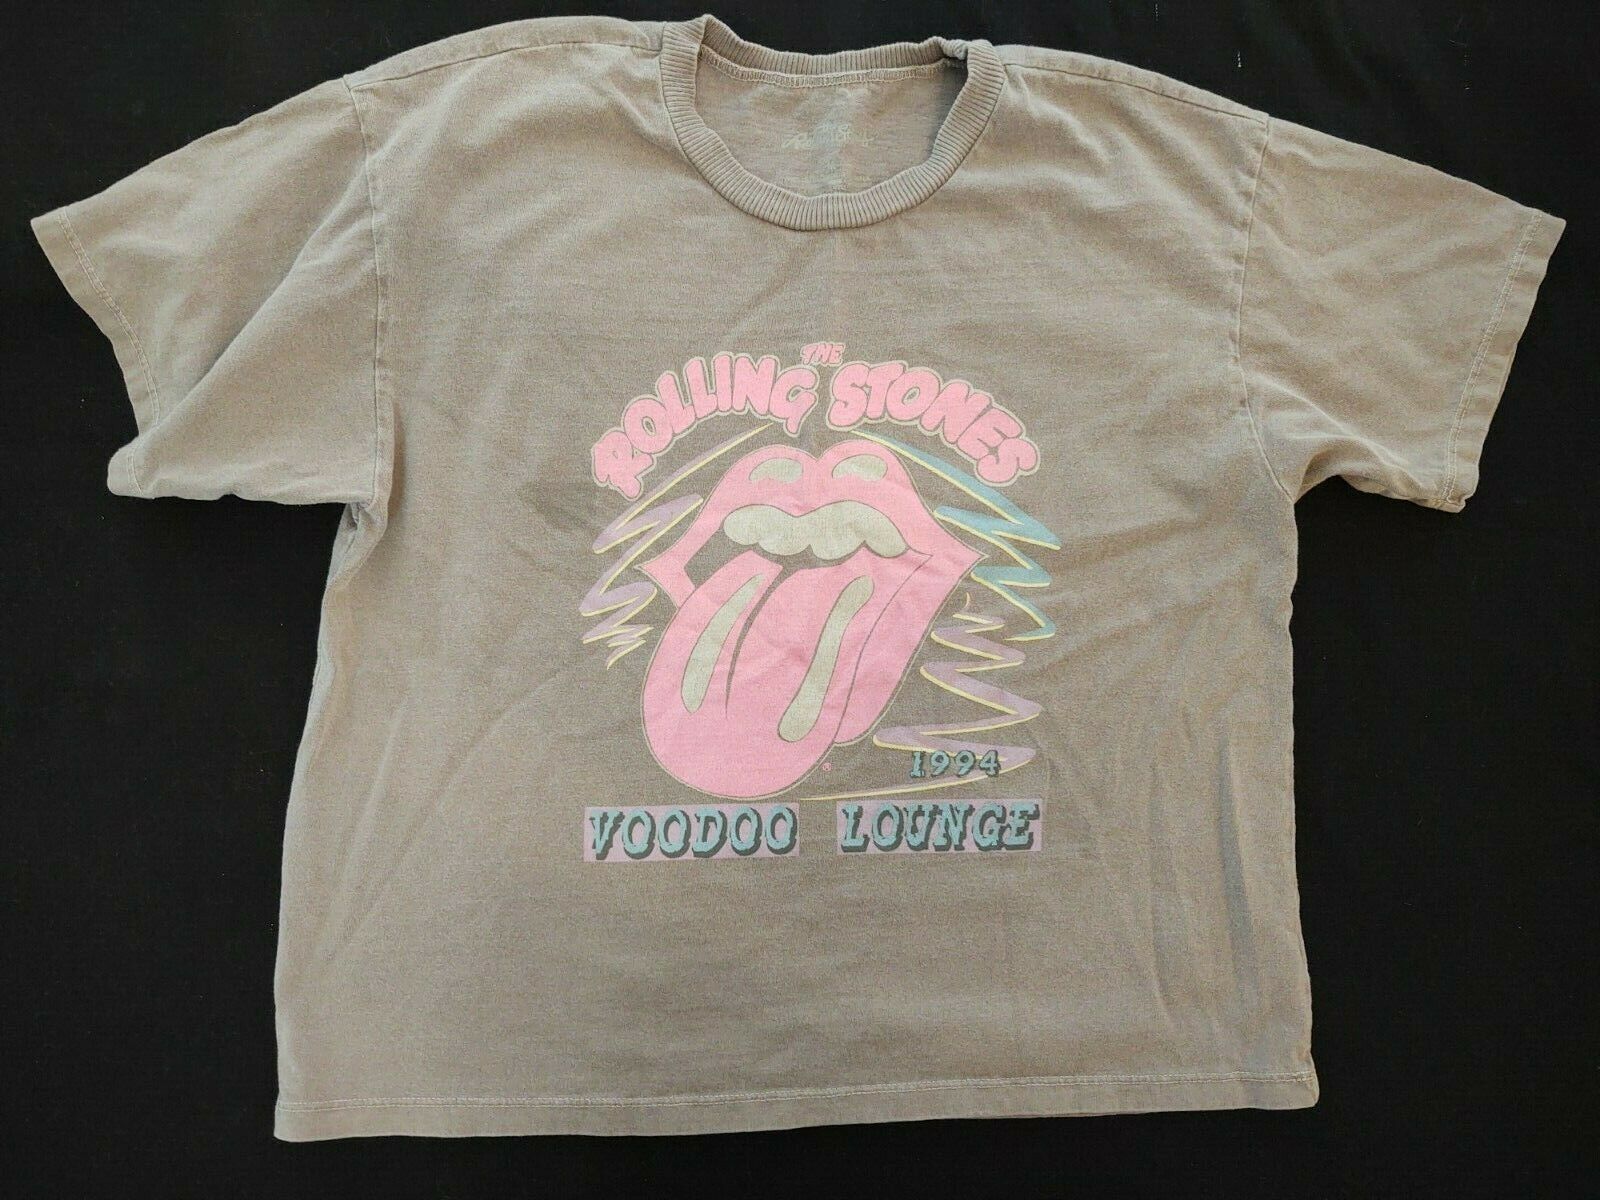 Rolling Stones 1994 Voodoo Lounge Shirt Women's Gray Fade Crop Length T Sz M